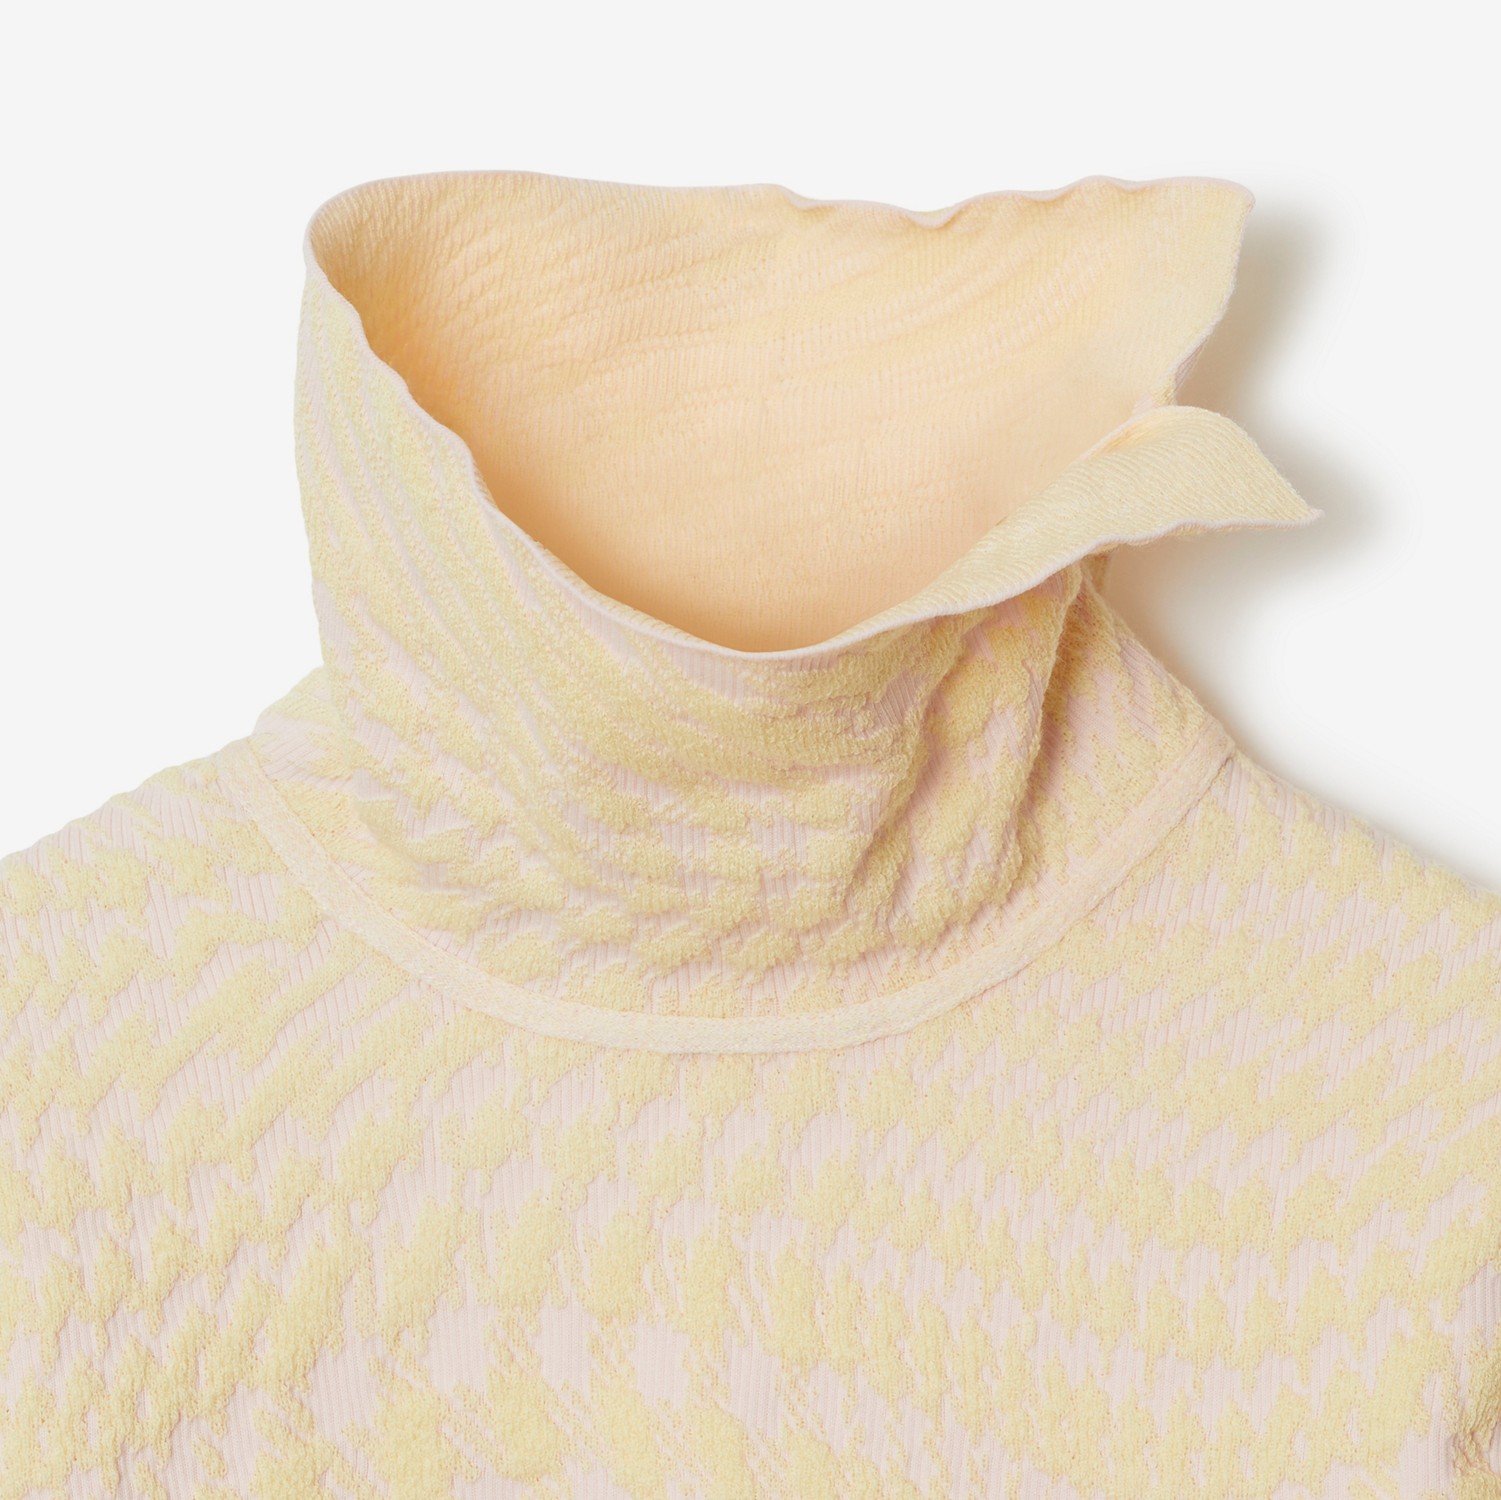 Suéter de mescla de lã com fios urdidos em pied-de-poule